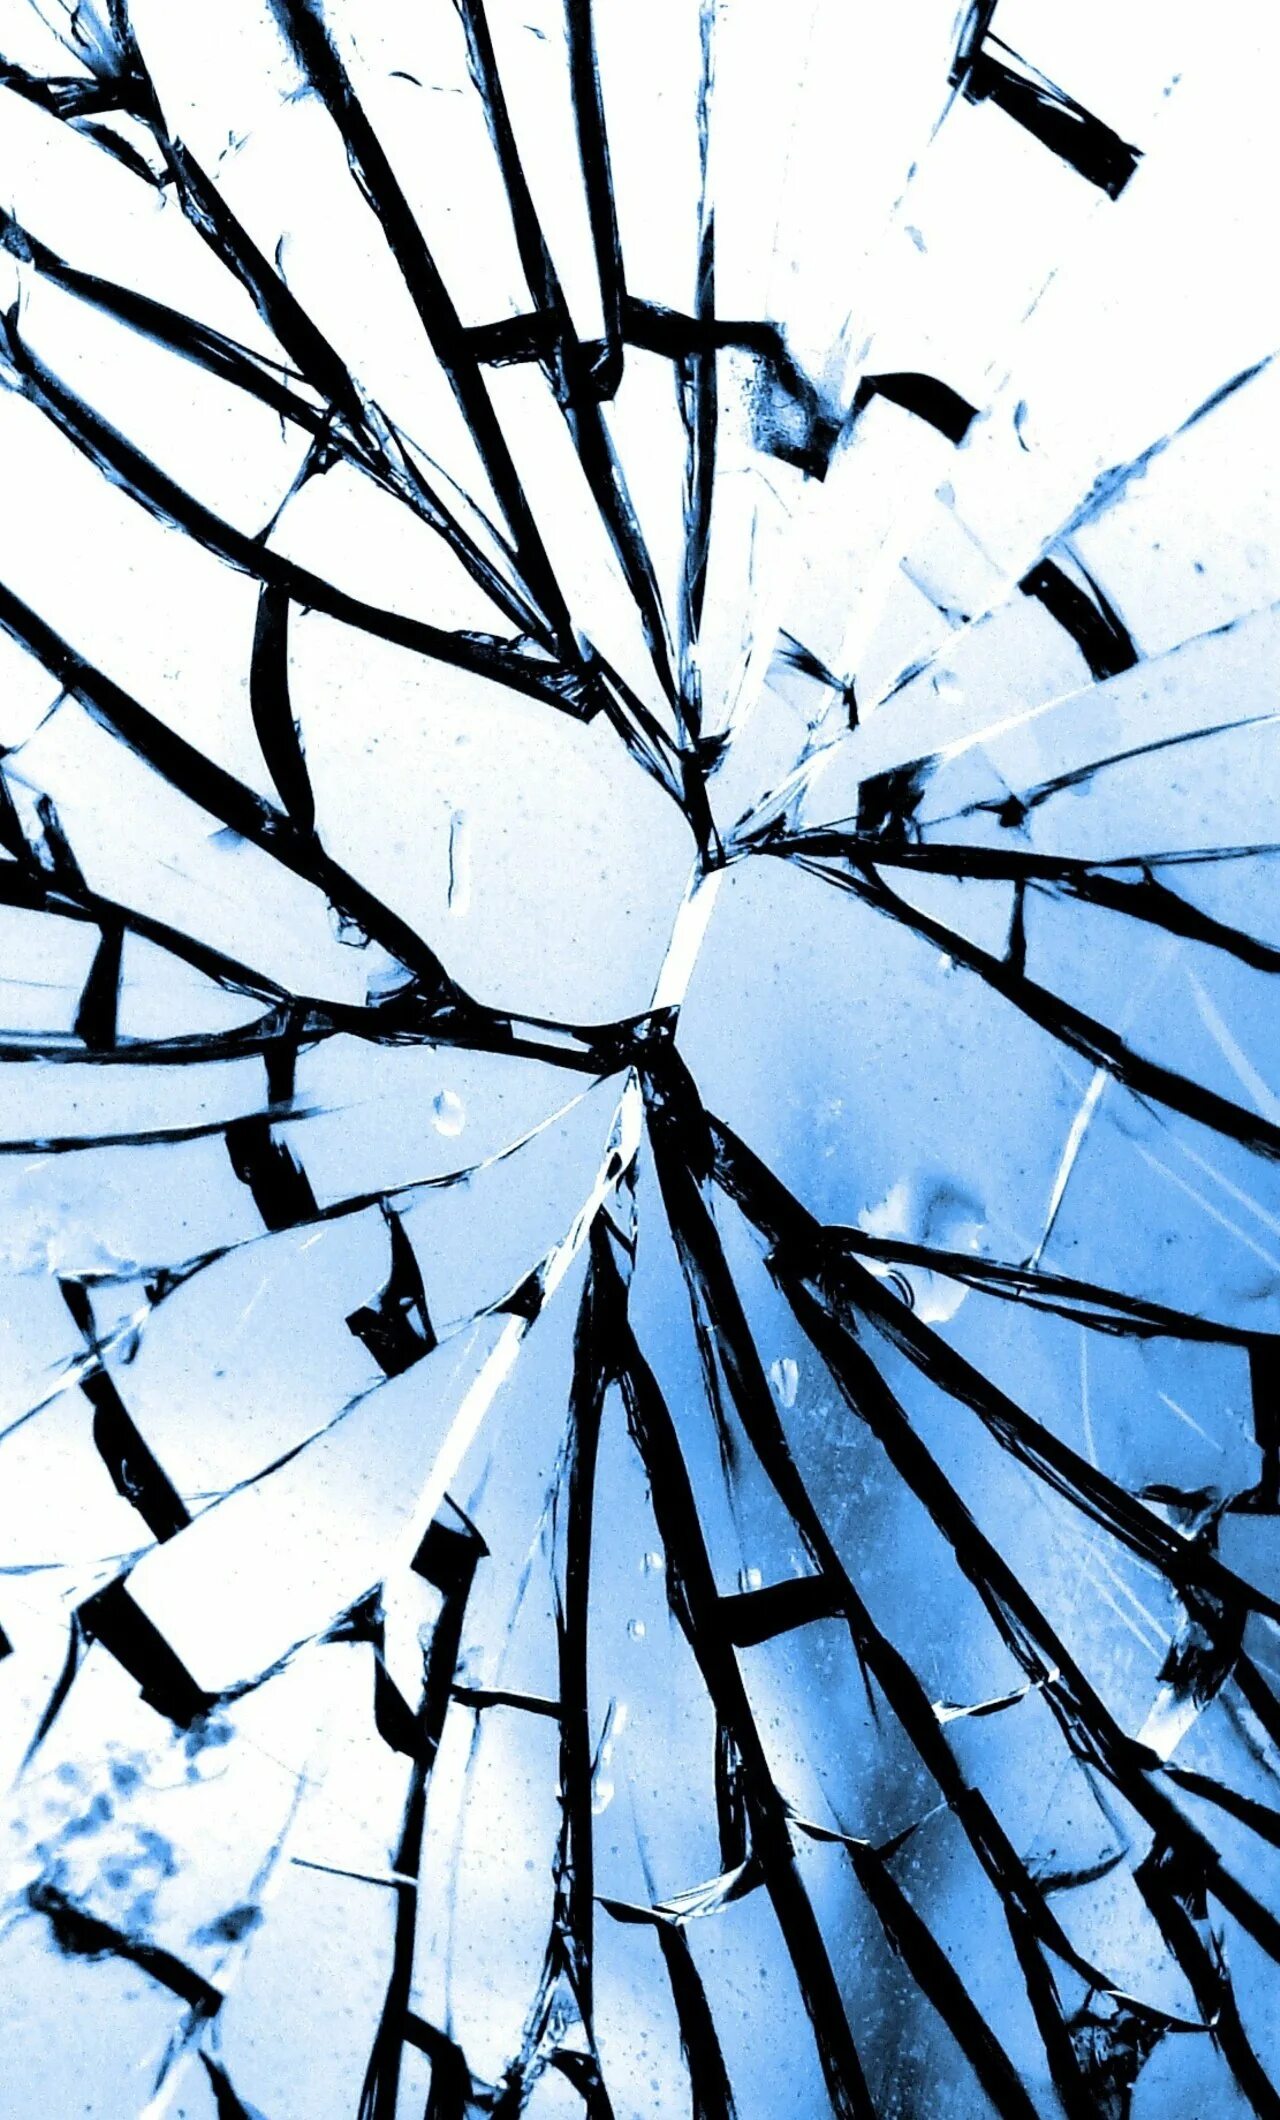 Разбитая заставка. Разбитое стекло. Разбитое зеркало. Треснутое стекло. Разбивающееся стекло.